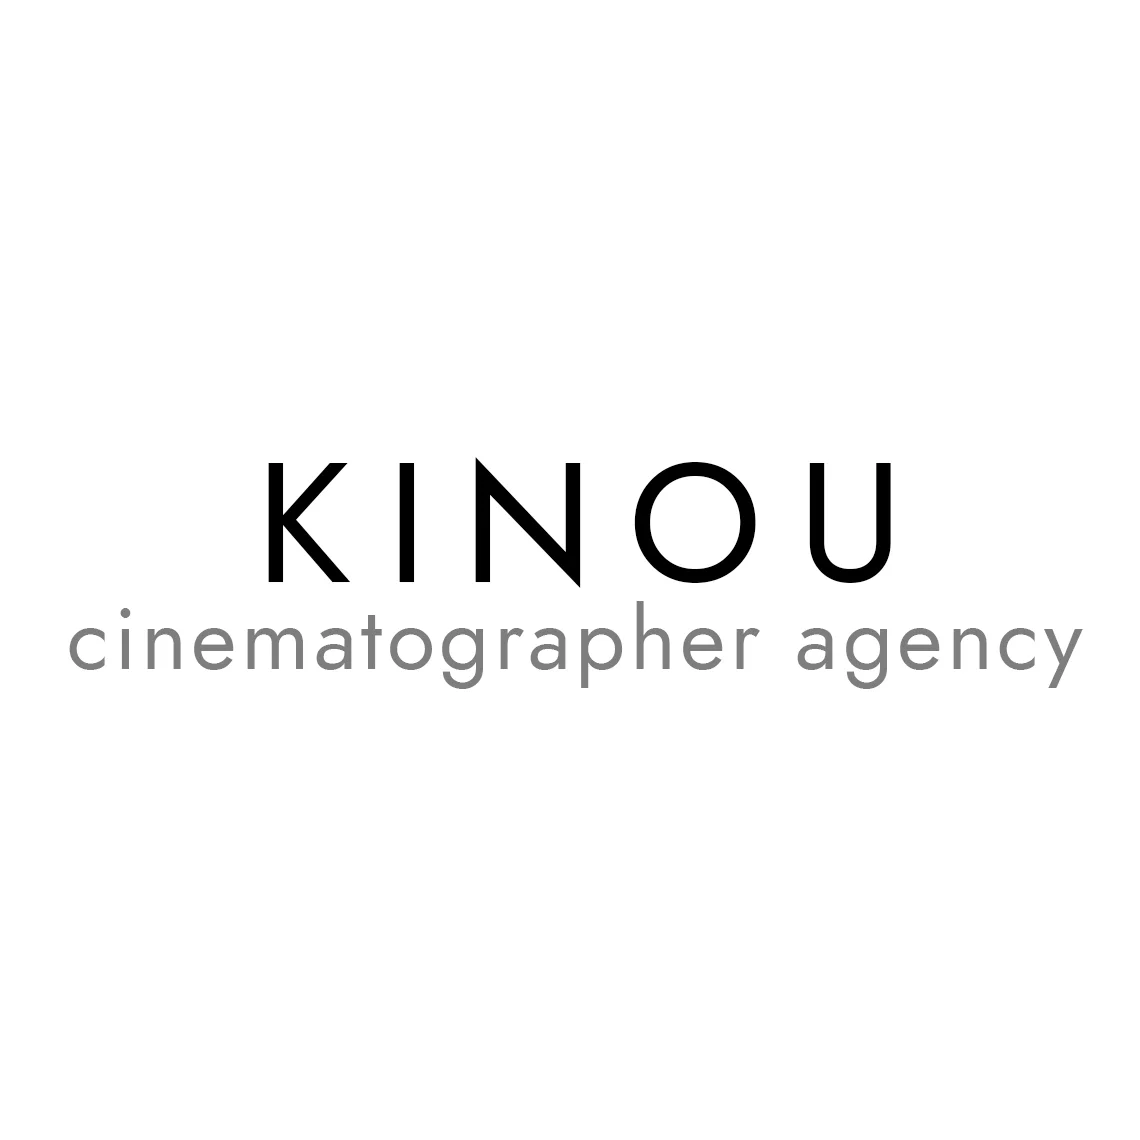 KINOU cinematographer agency